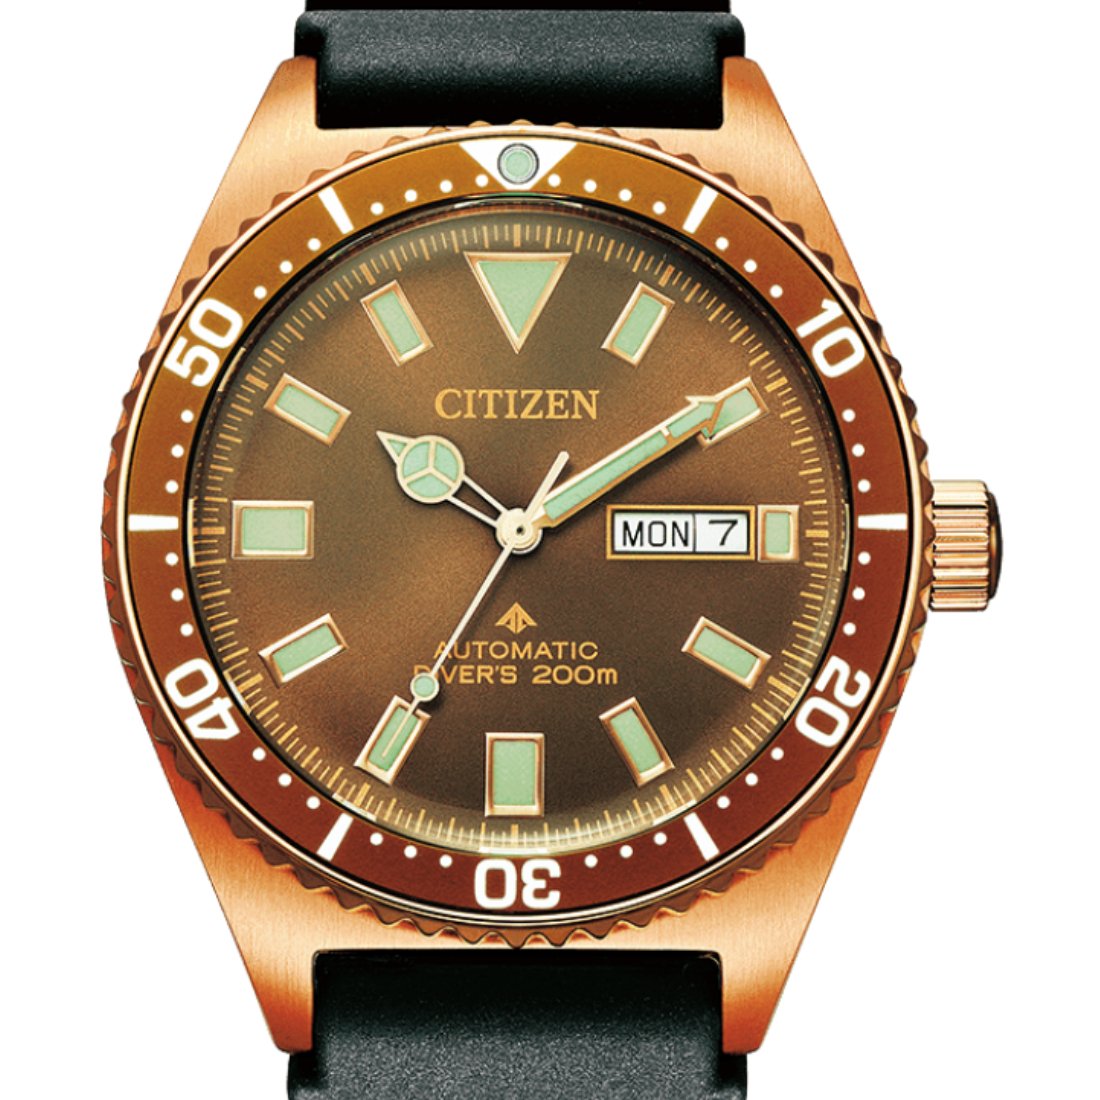 Citizen NY0125-08W Promaster Marine Automatic Divers 200m Watch (PRE-ORDER) -Citizen